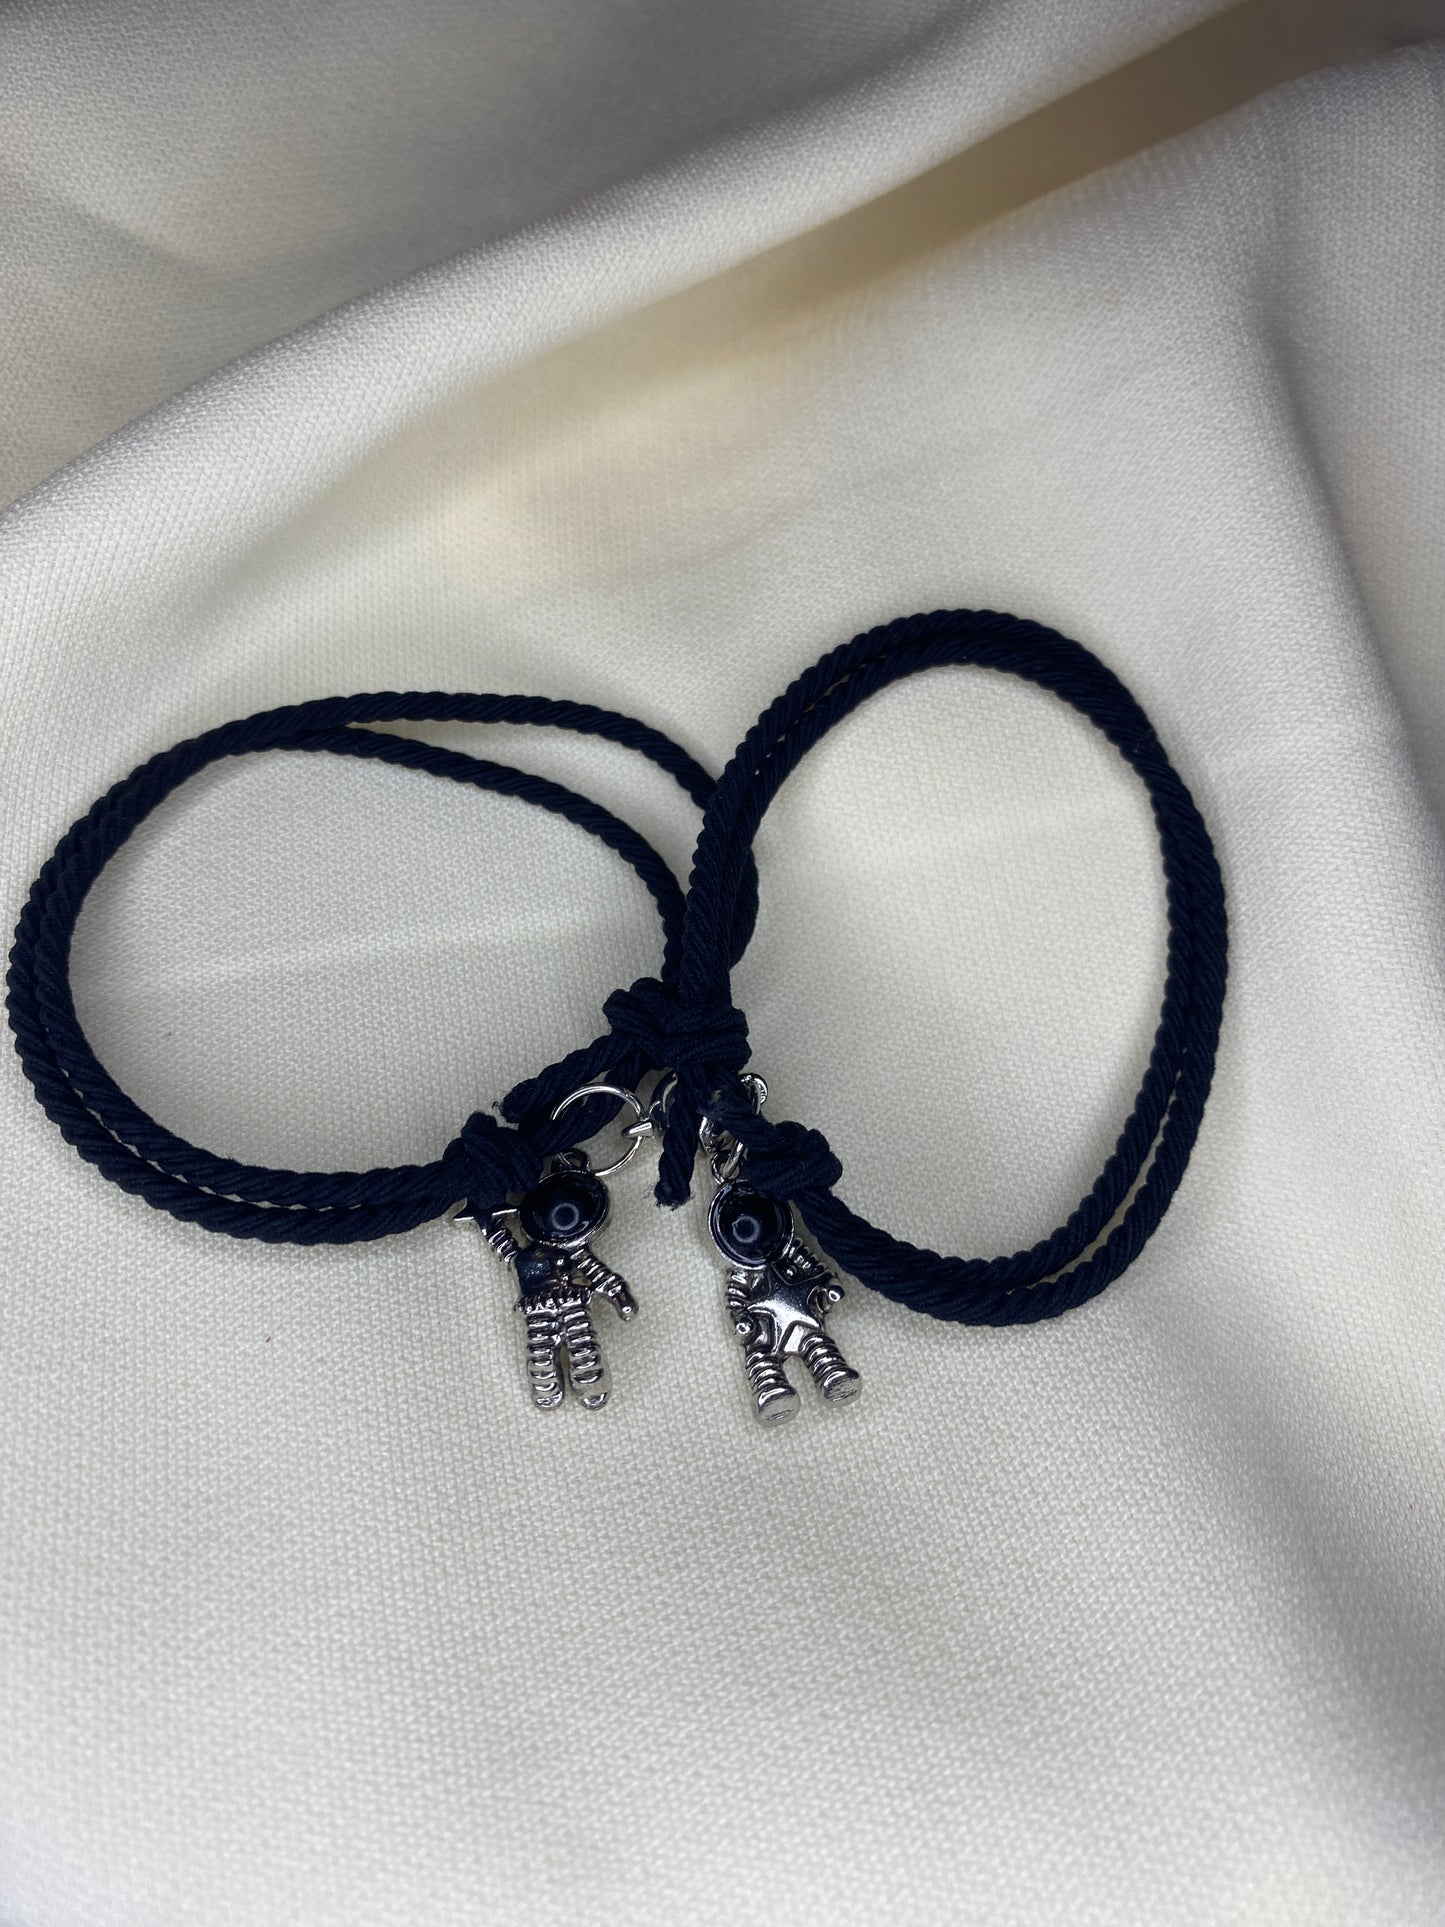 Matching Astro Bracelets